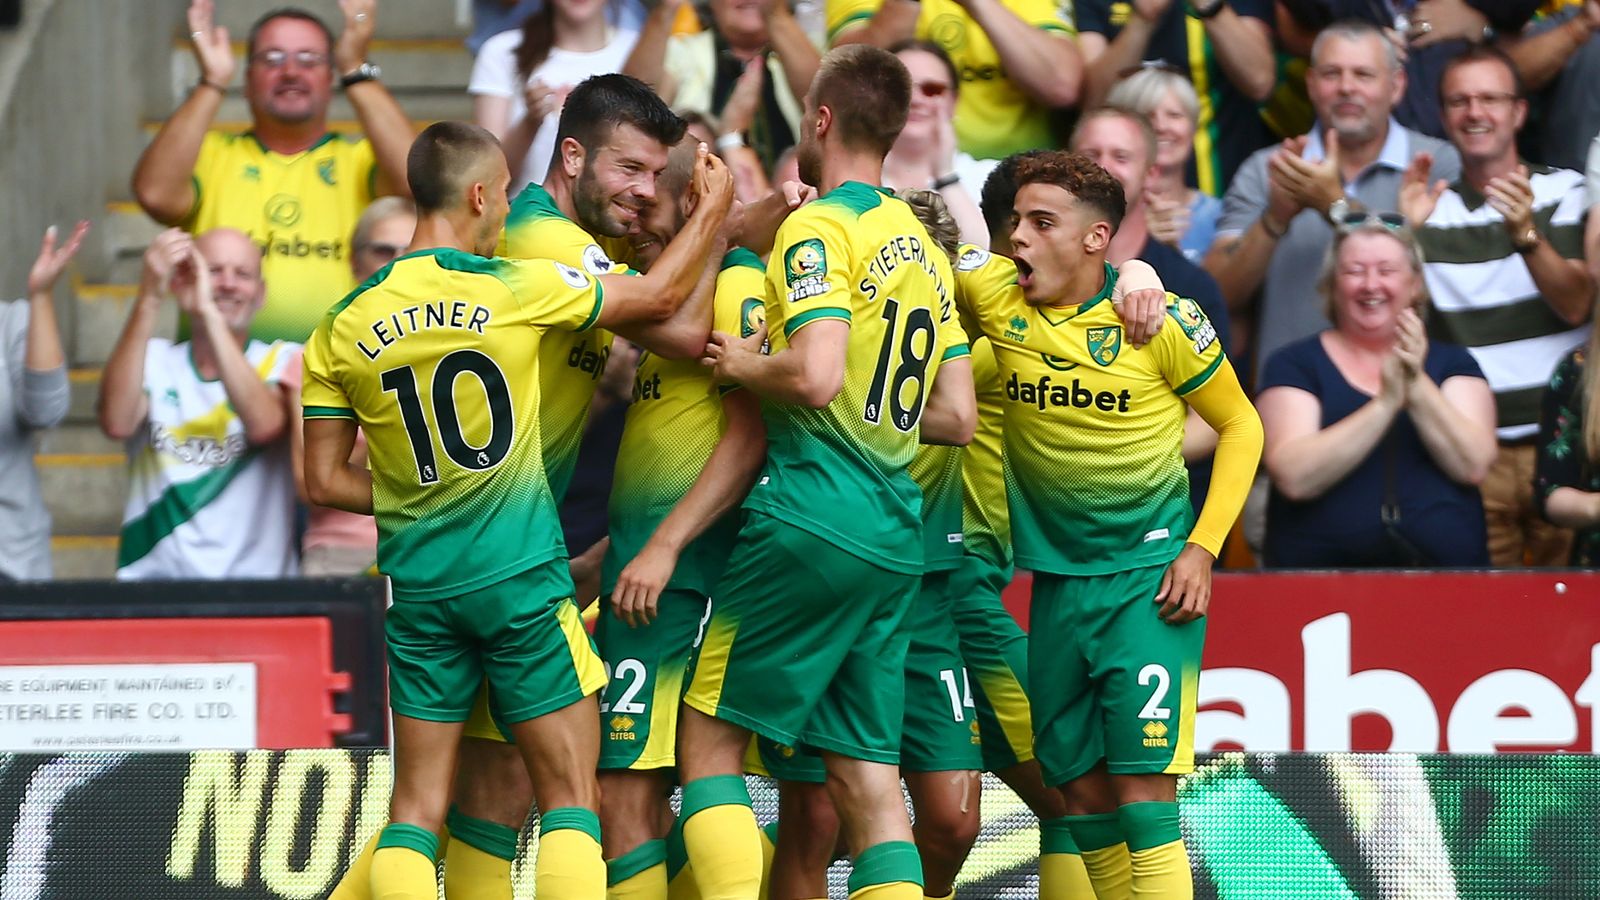 Norwich 3 - 1 Newcastle - Match Report & Highlights1600 x 900